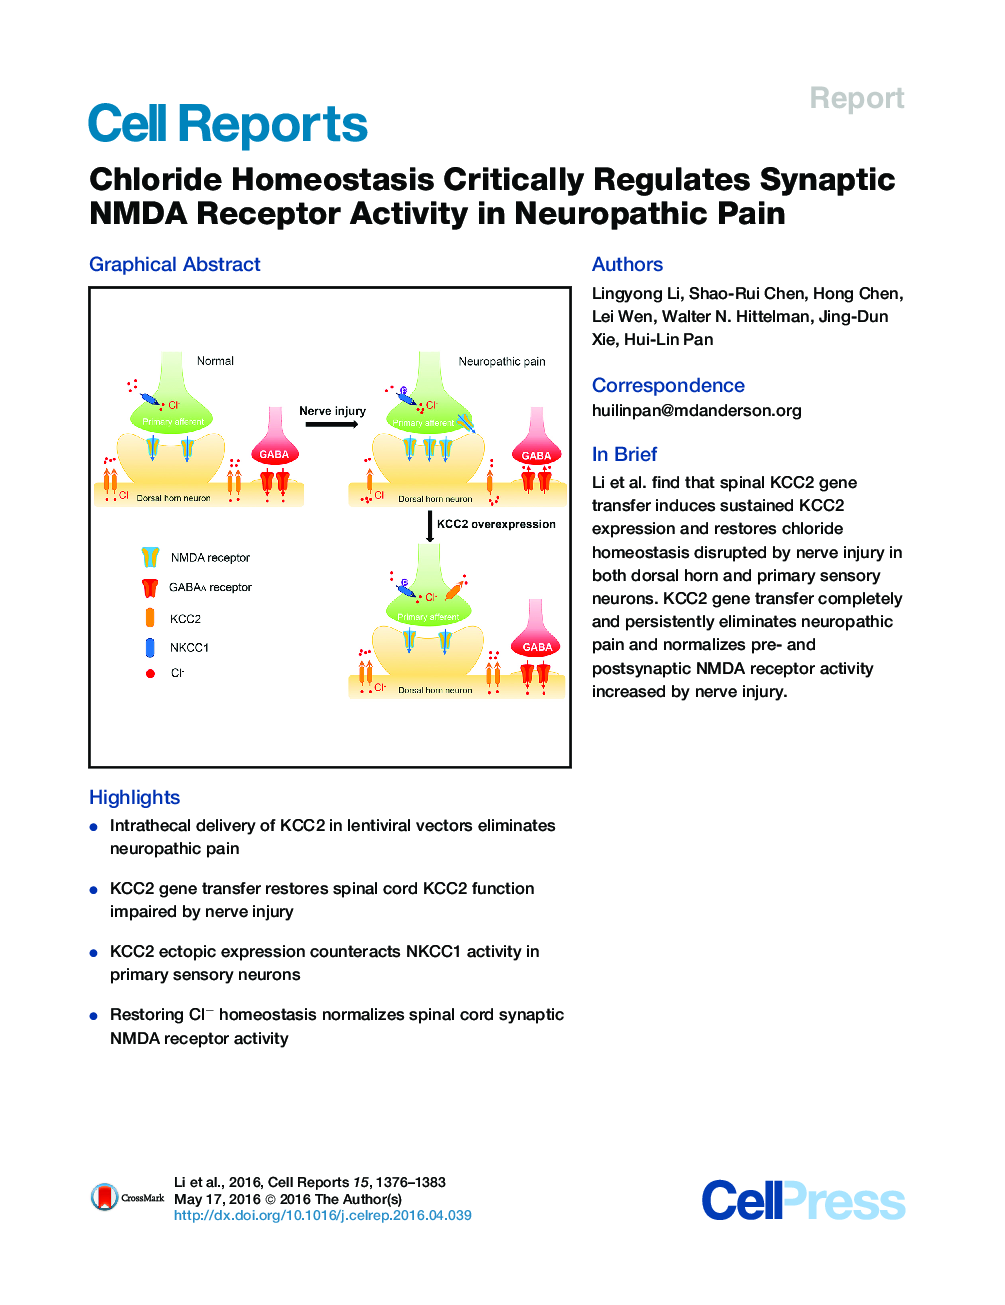 Chloride Homeostasis Critically Regulates Synaptic NMDA Receptor Activity in Neuropathic Pain